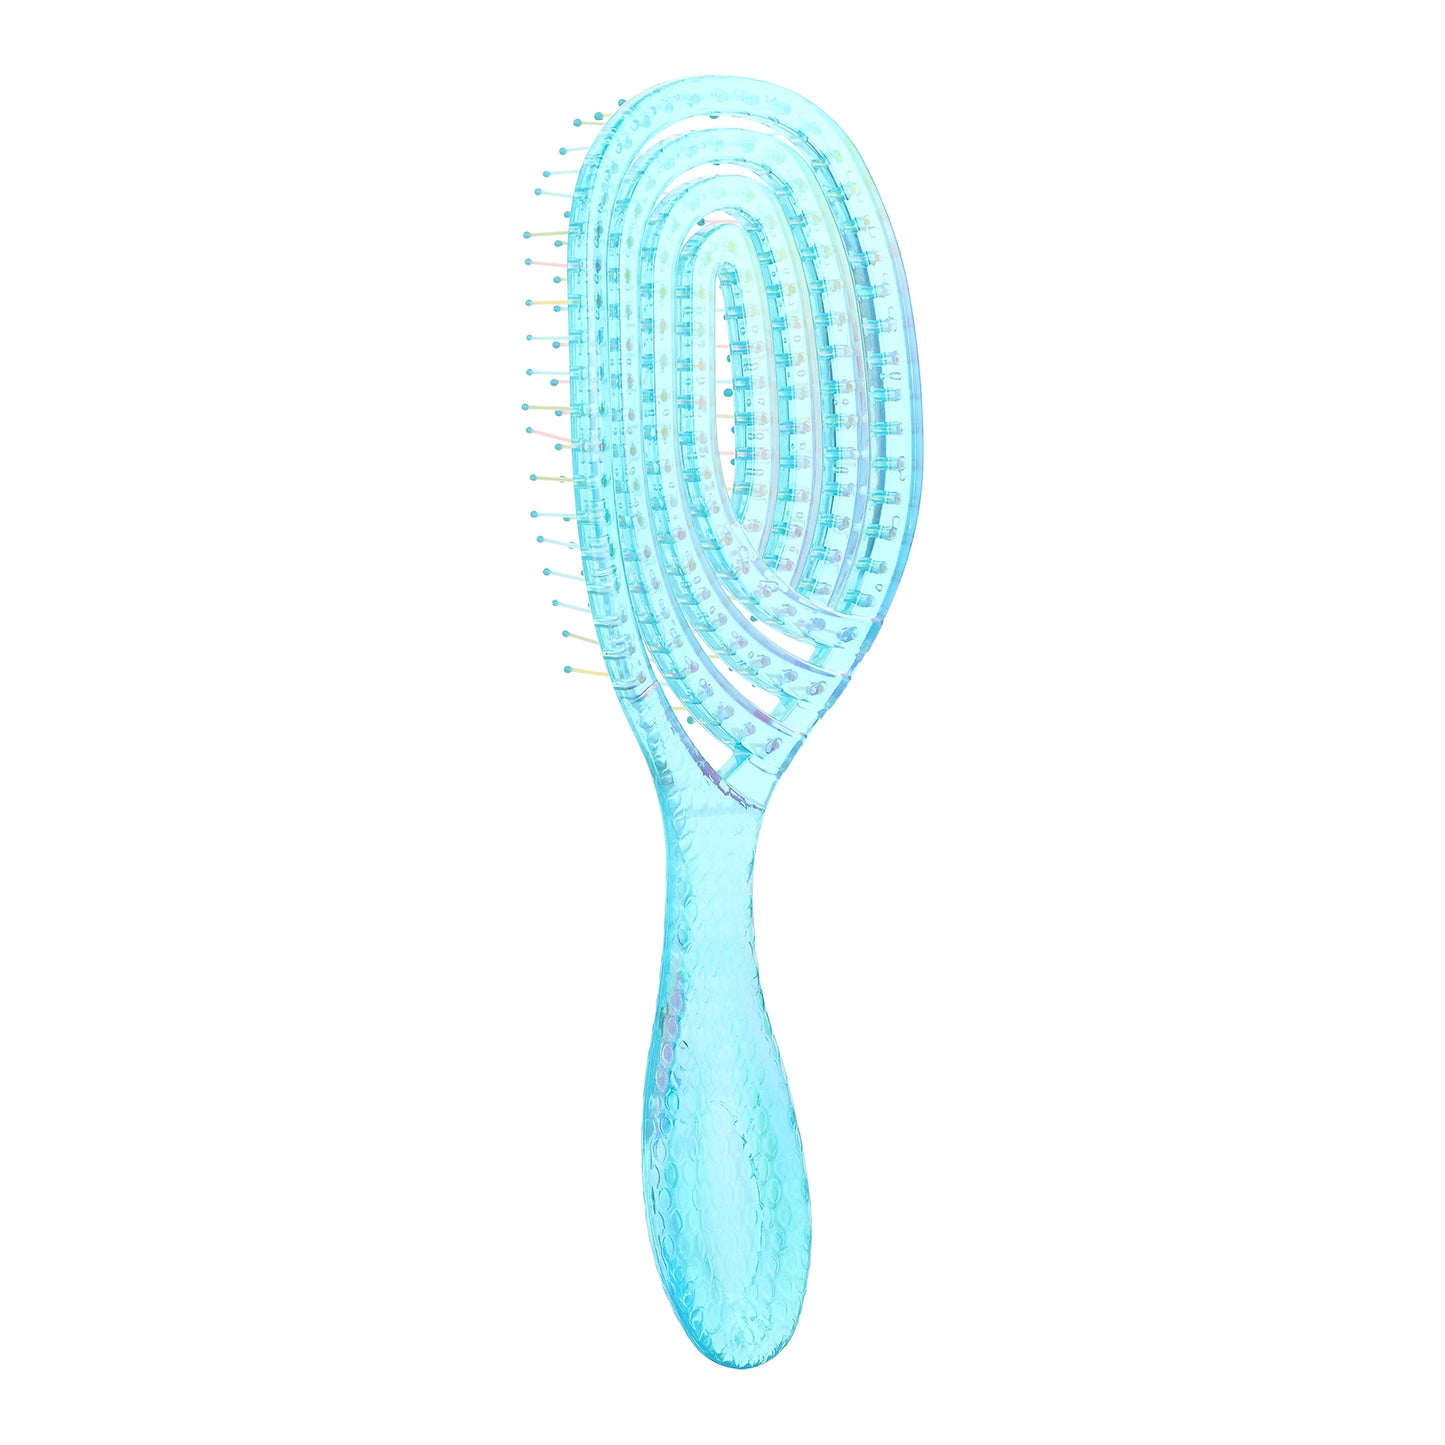 Curved Vented Hair Brush Detangling for Blow Drying Colorful Wet Brushes for Long Straight Fine Hair for Women Round Styling Spiral Detangler Soft Bristles Transparent Medium